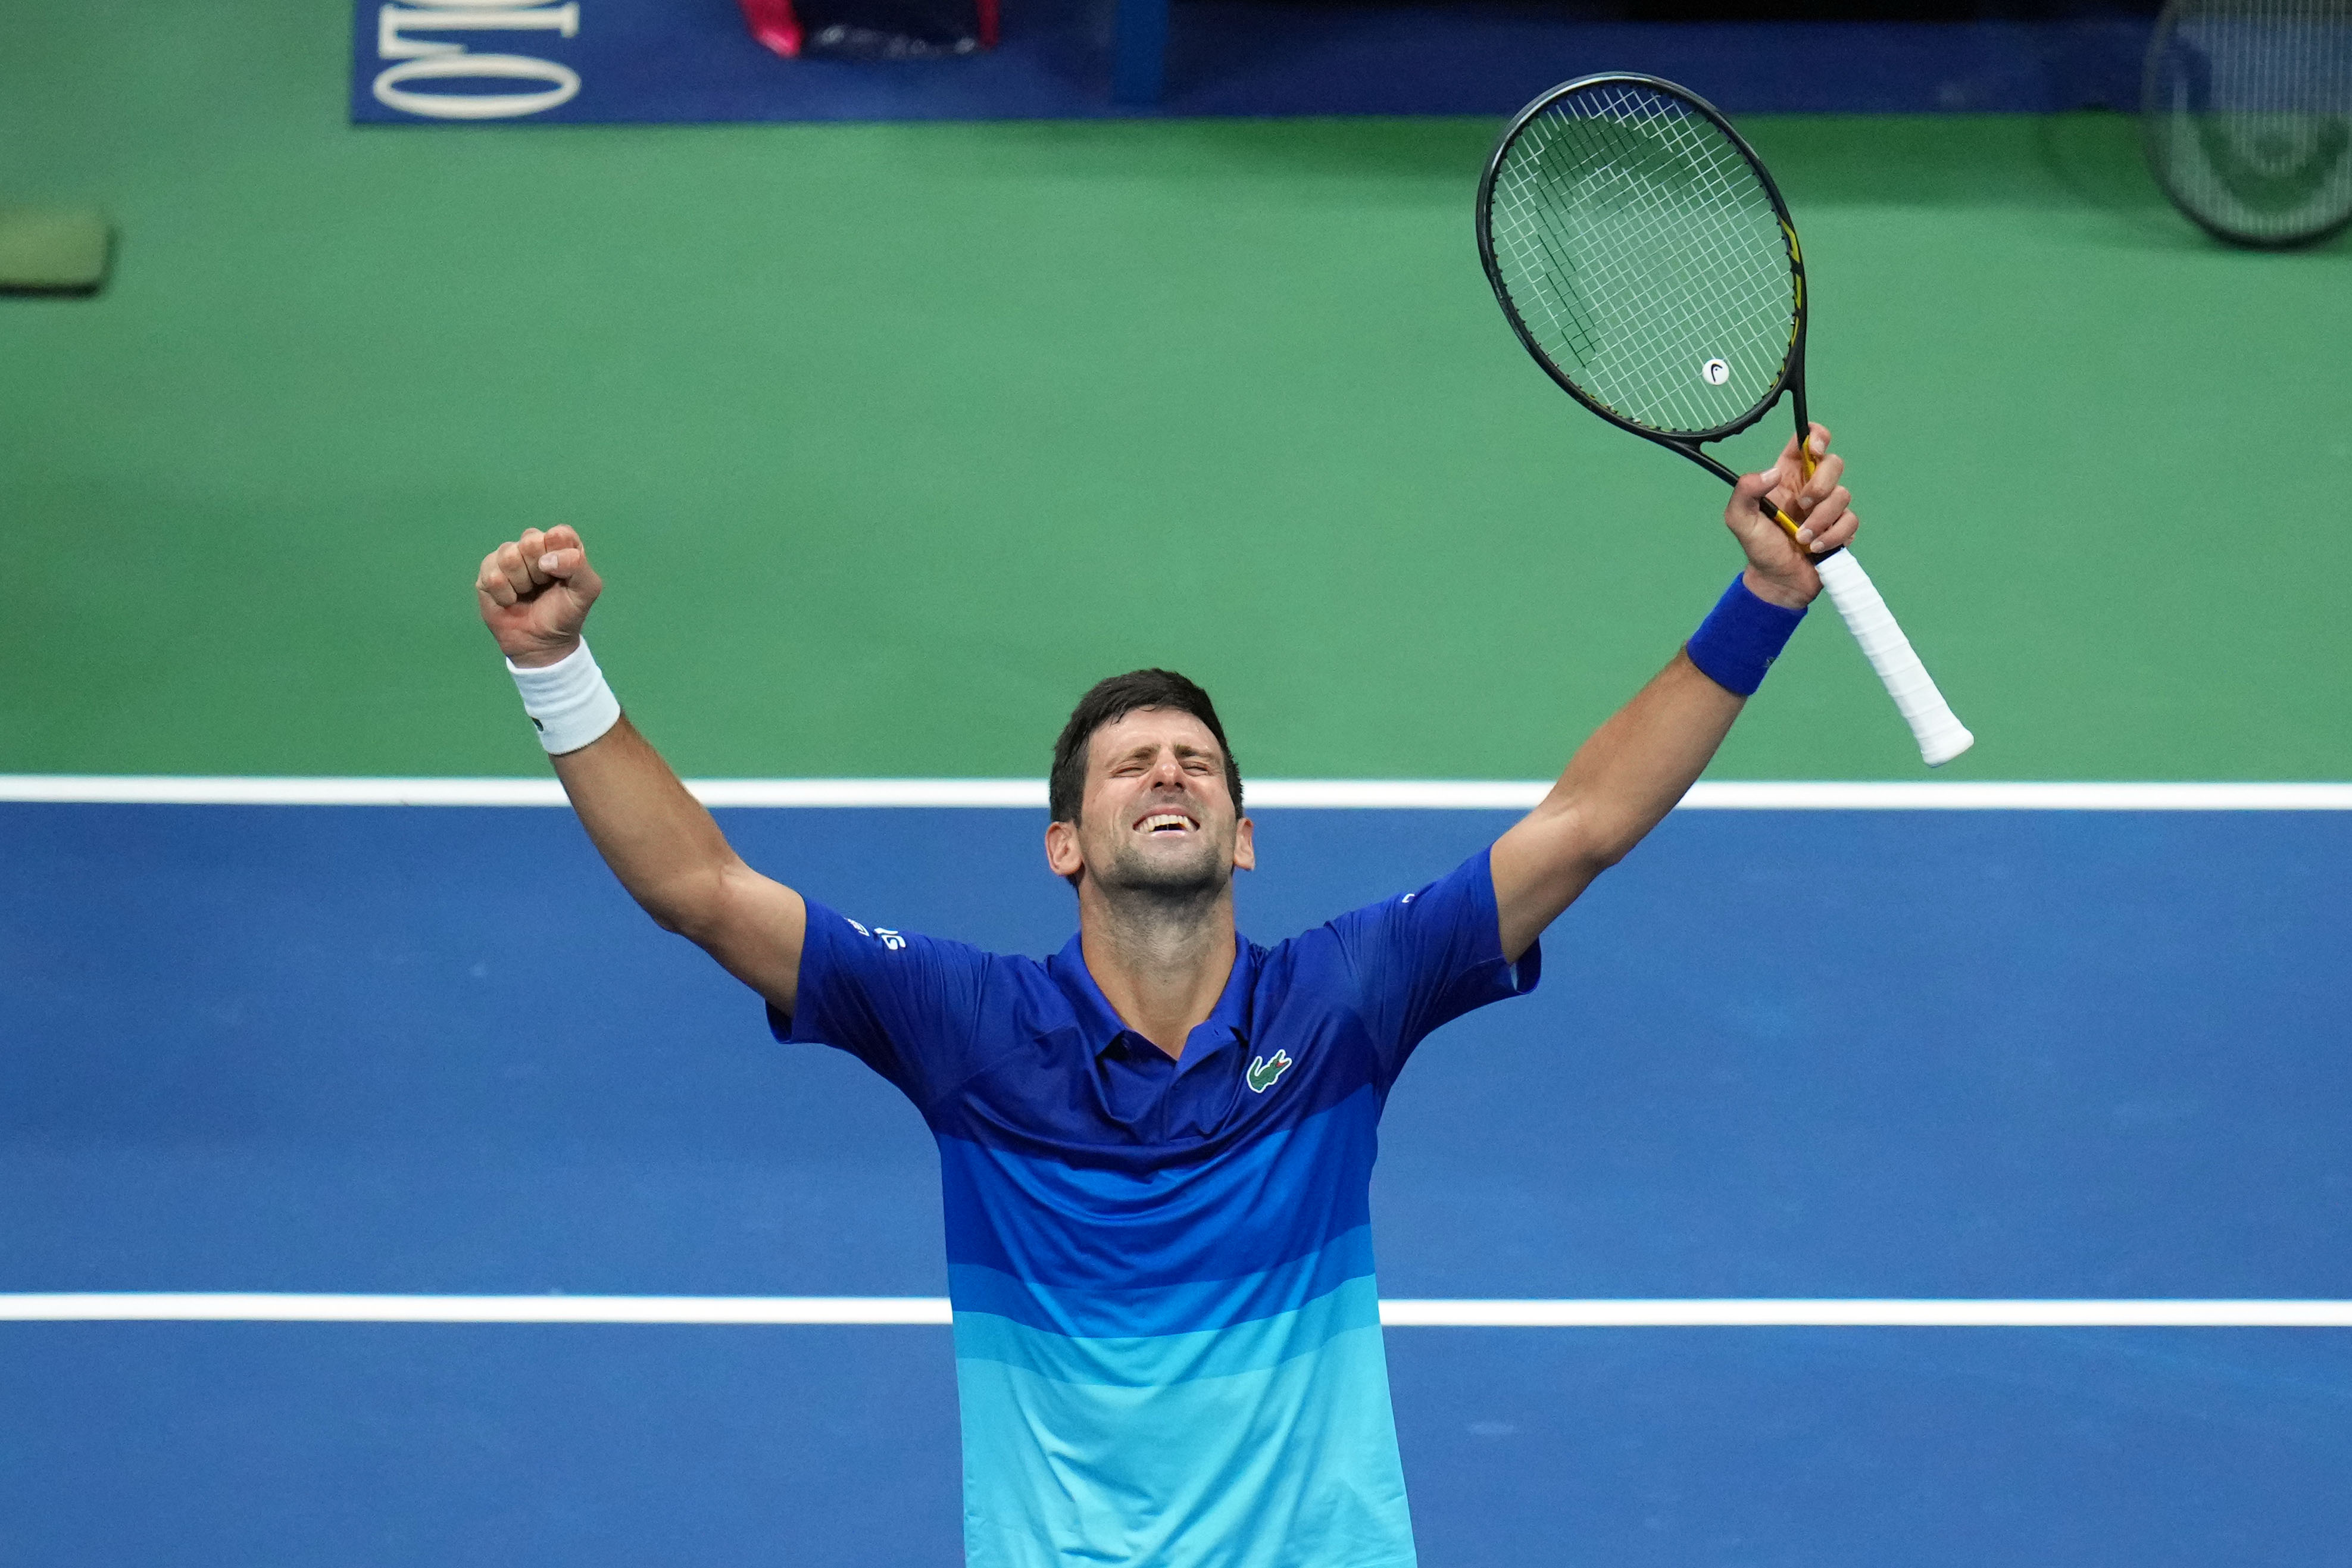 Djokovic overcomes flat start to reach U.S. Open quarter-finals | Reuters